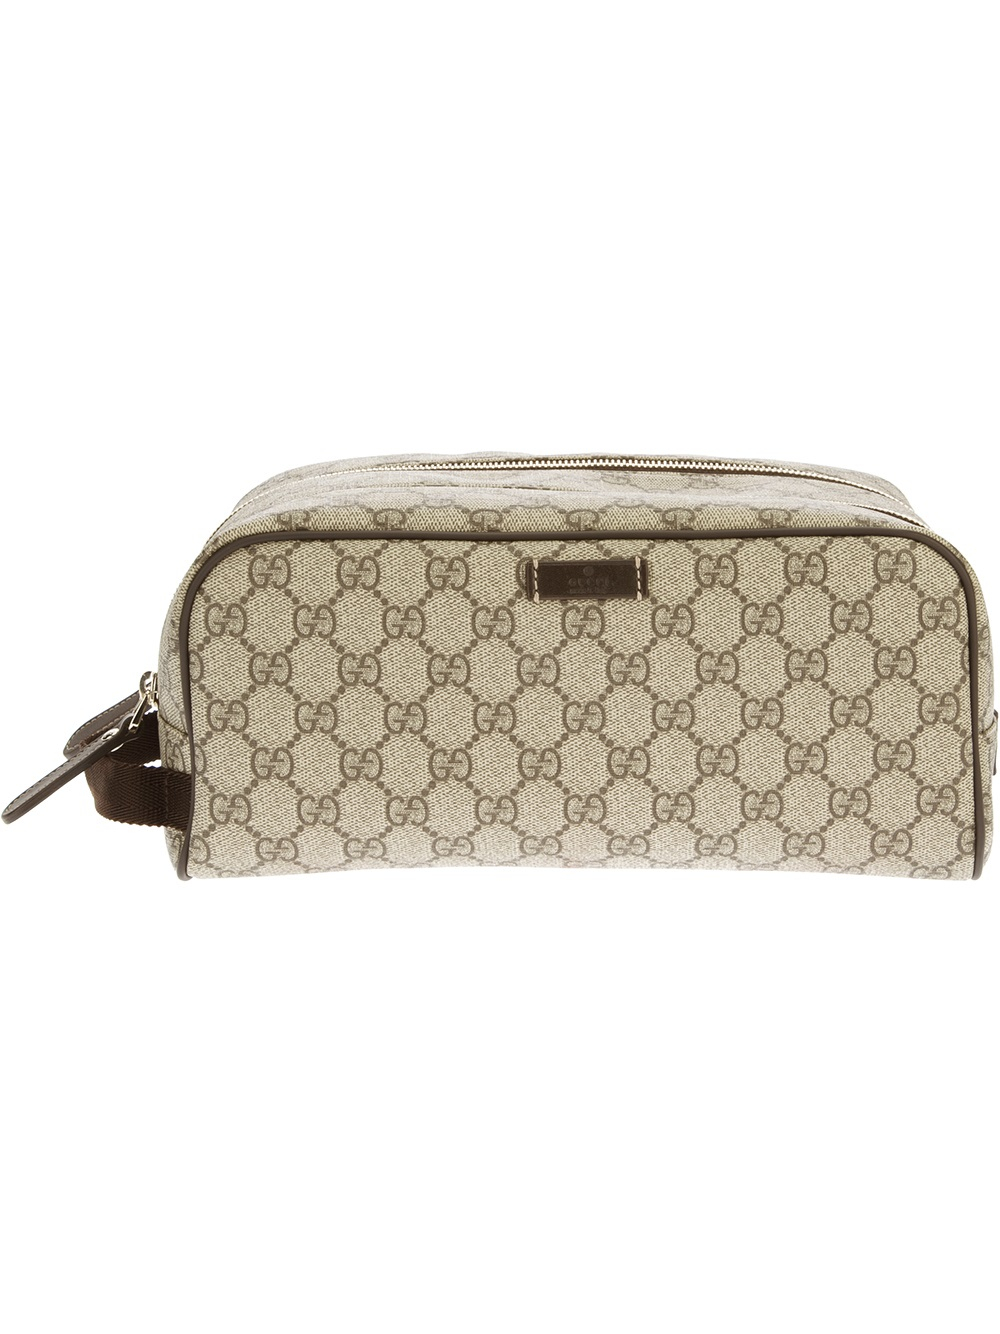 Gucci Logo Makeup Bag in Beige (nude & neutrals) | Lyst